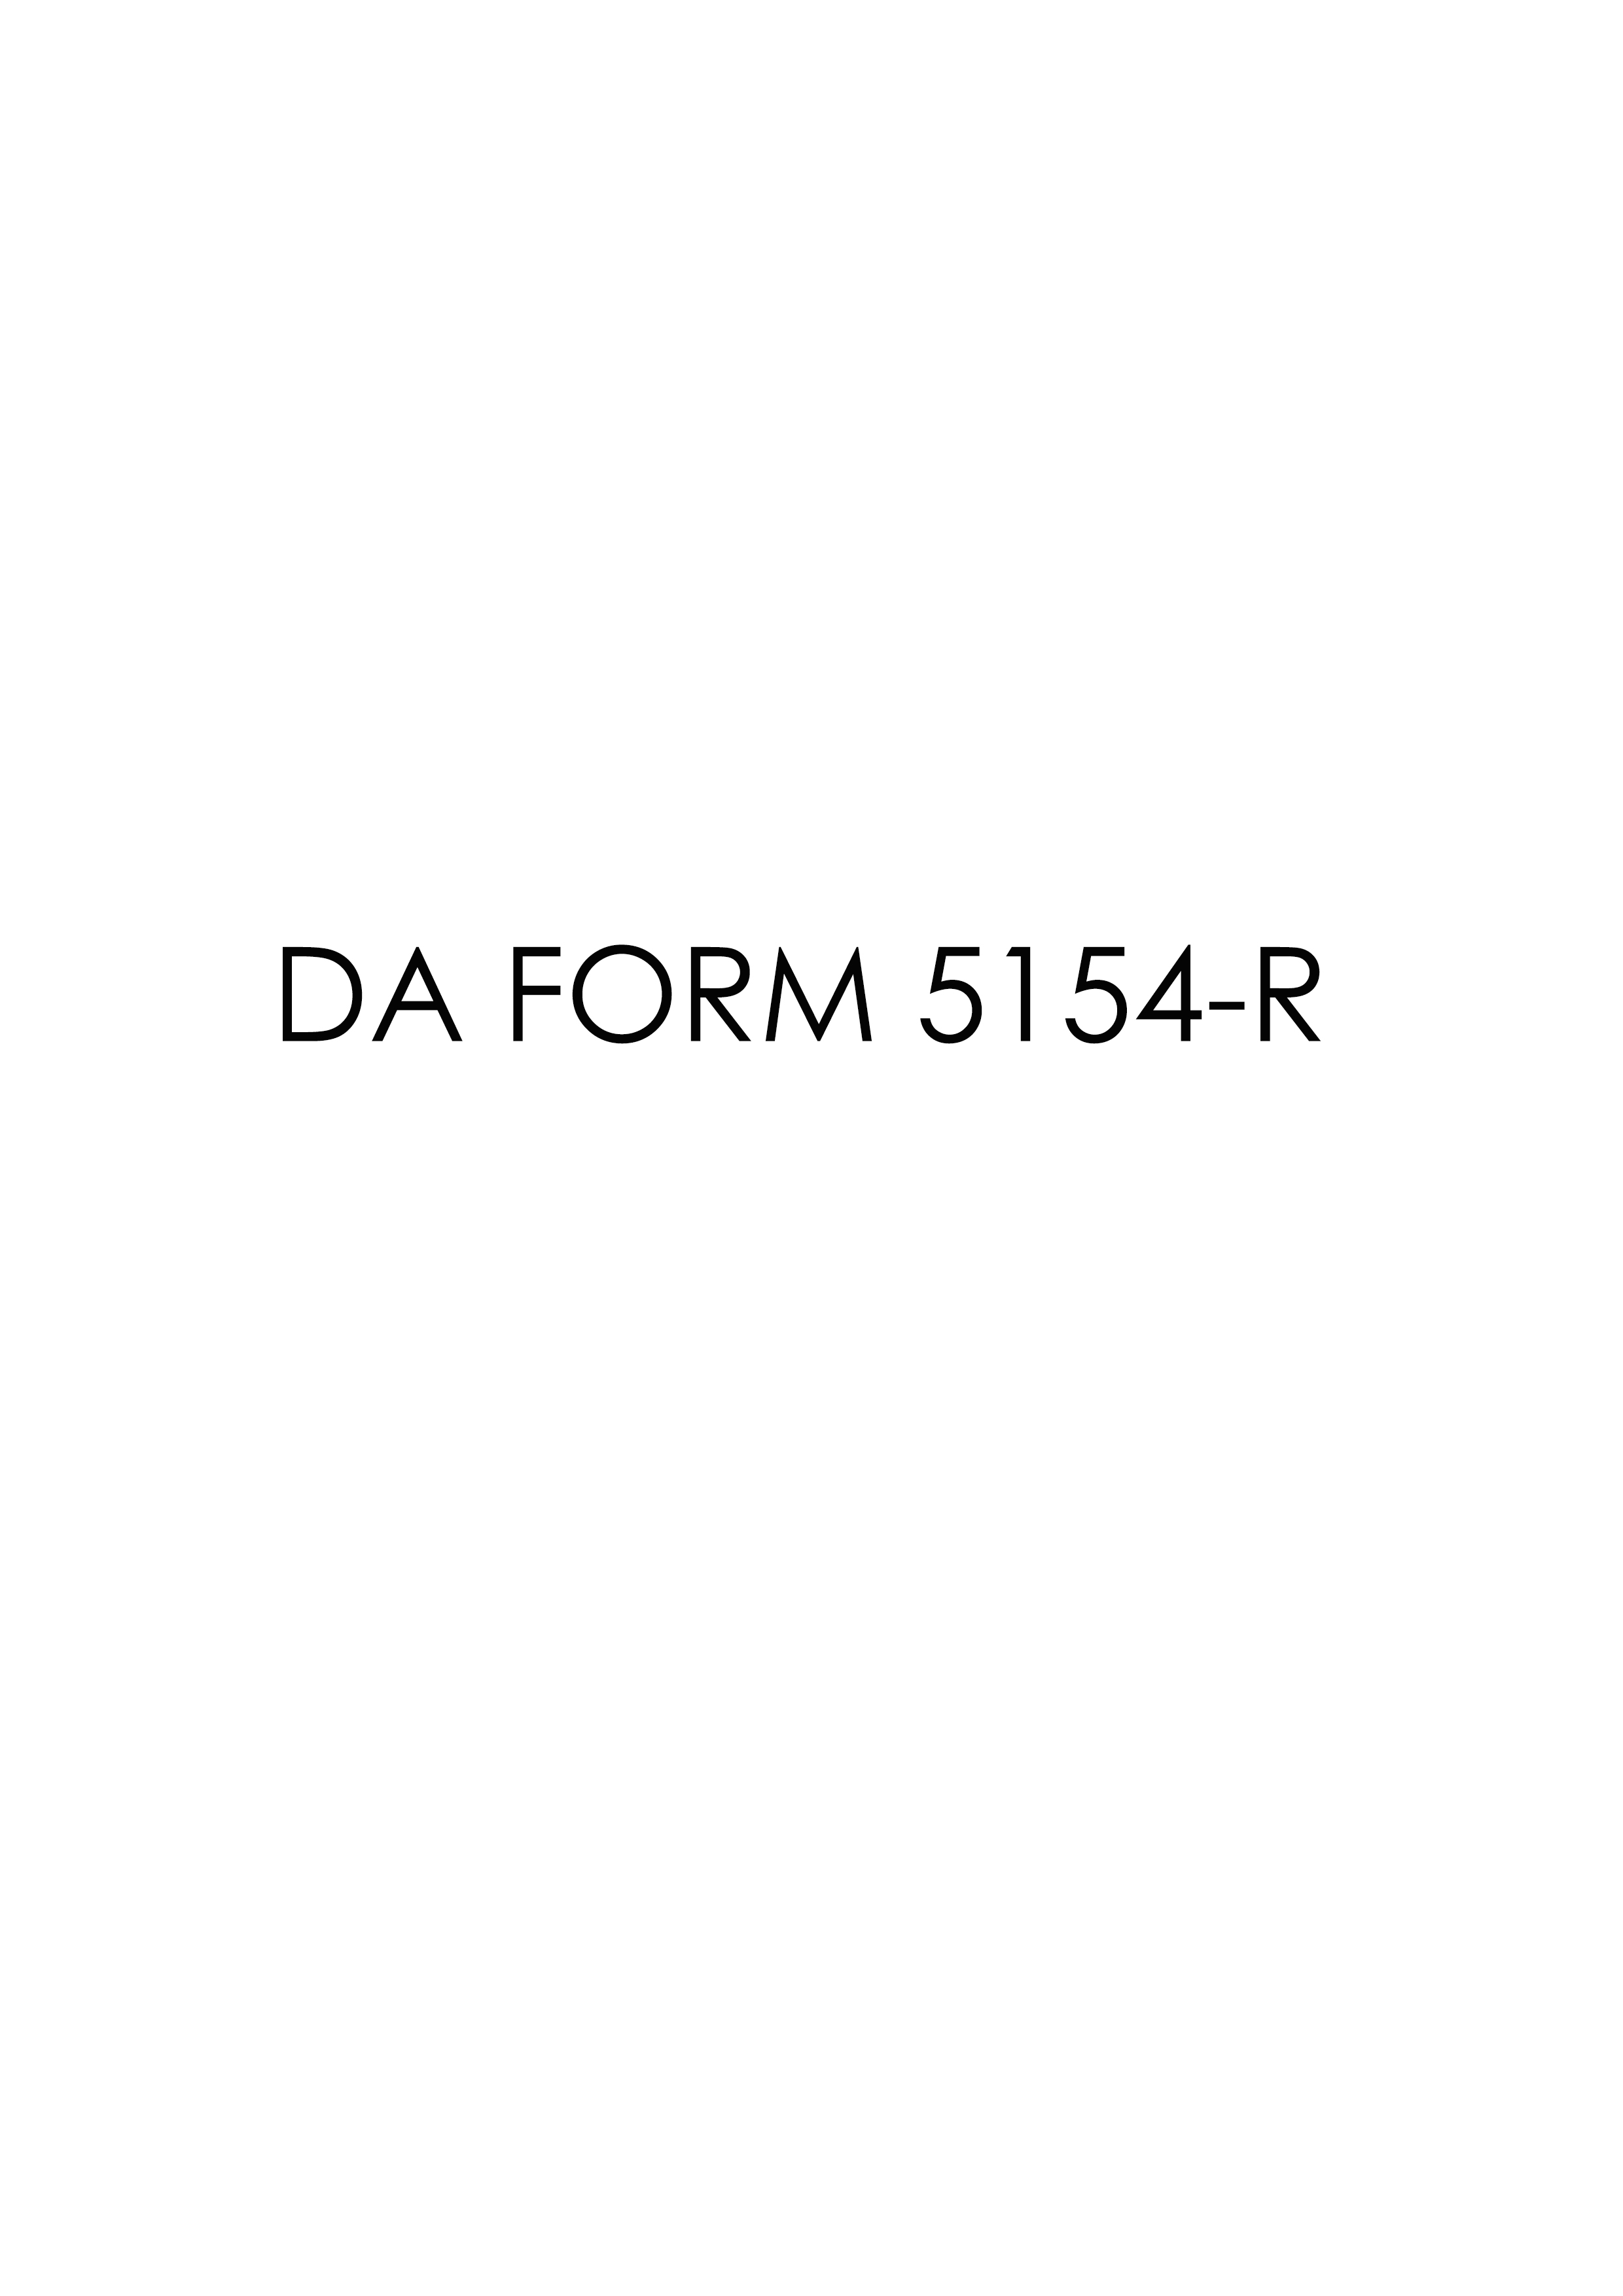 da Form 5154-R fillable